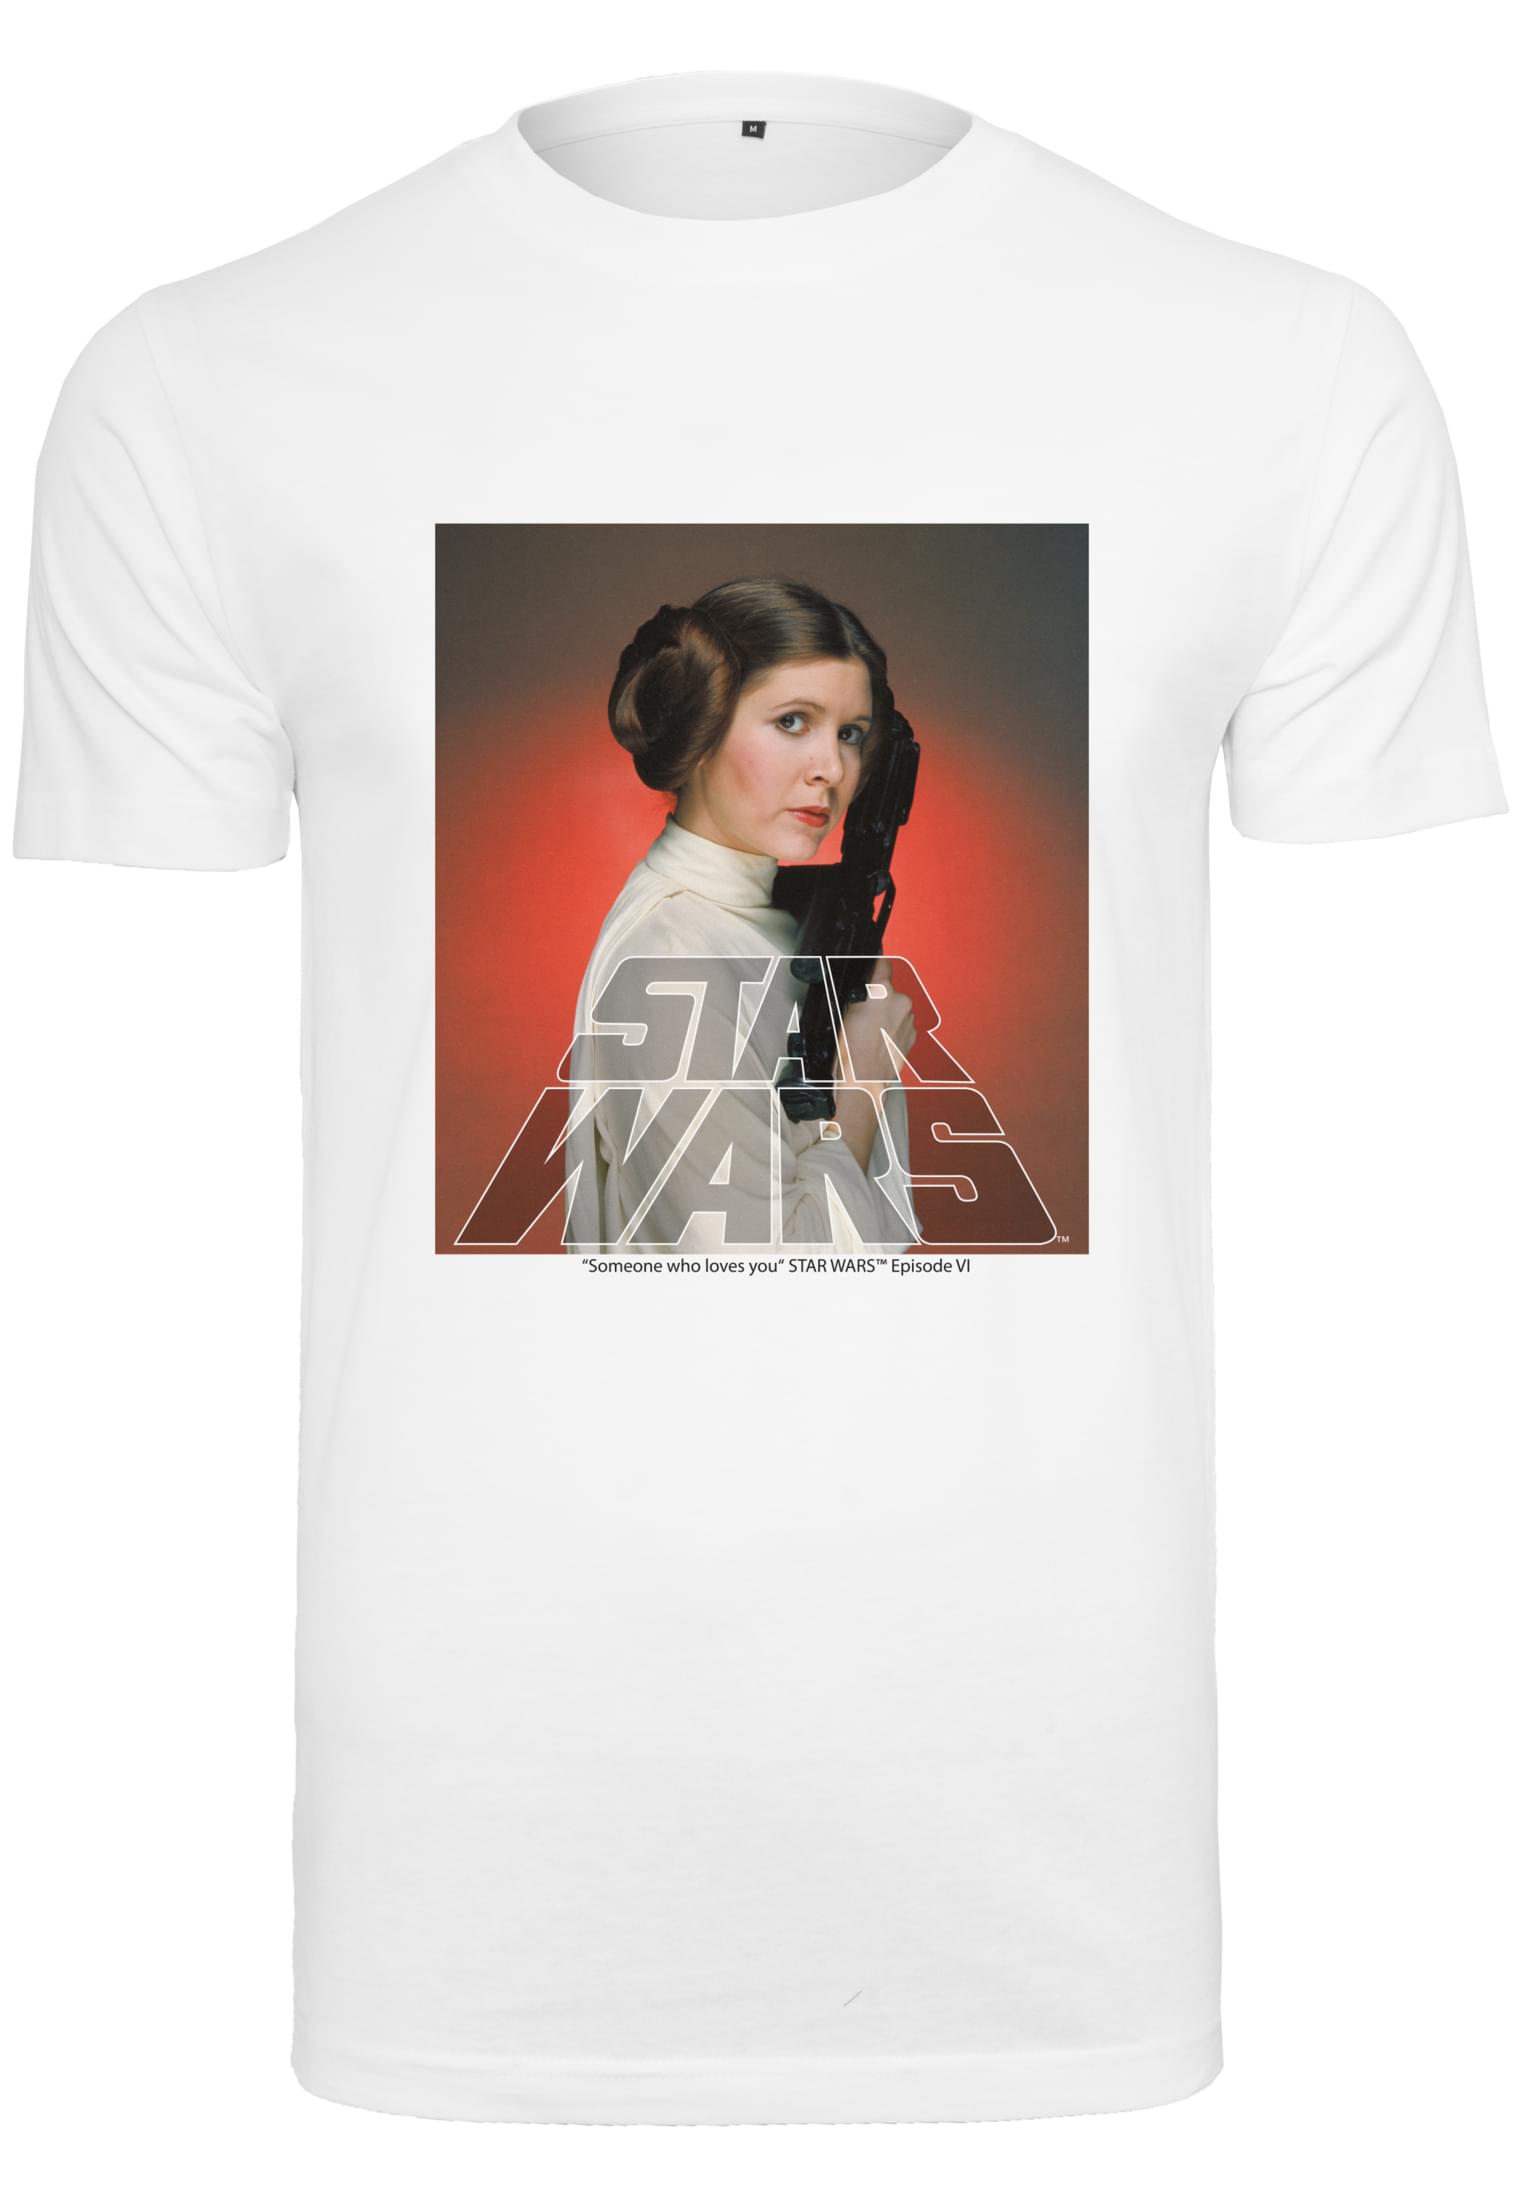  Star Wars Princess Leia Tee in Farbe white